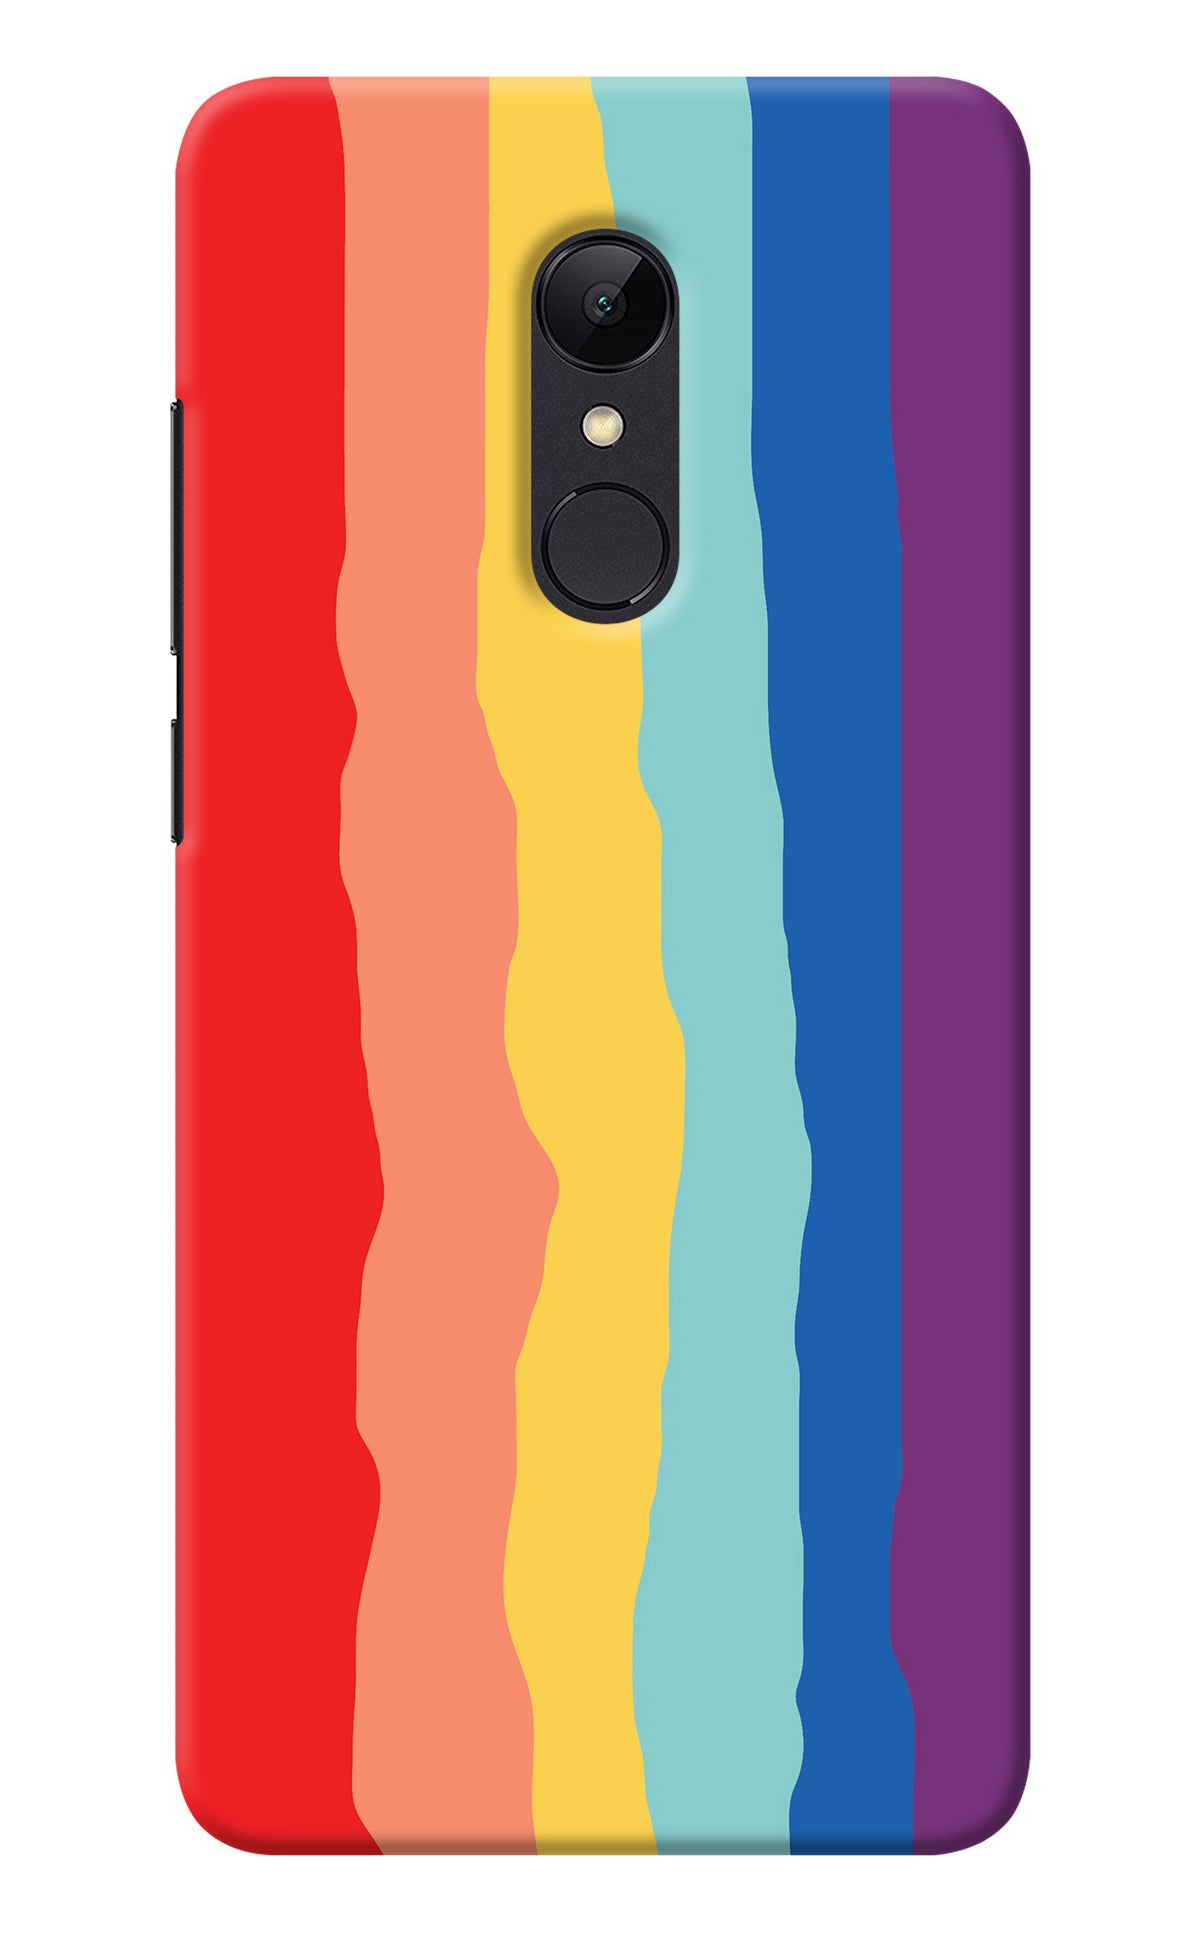 Rainbow Redmi Note 4 Back Cover